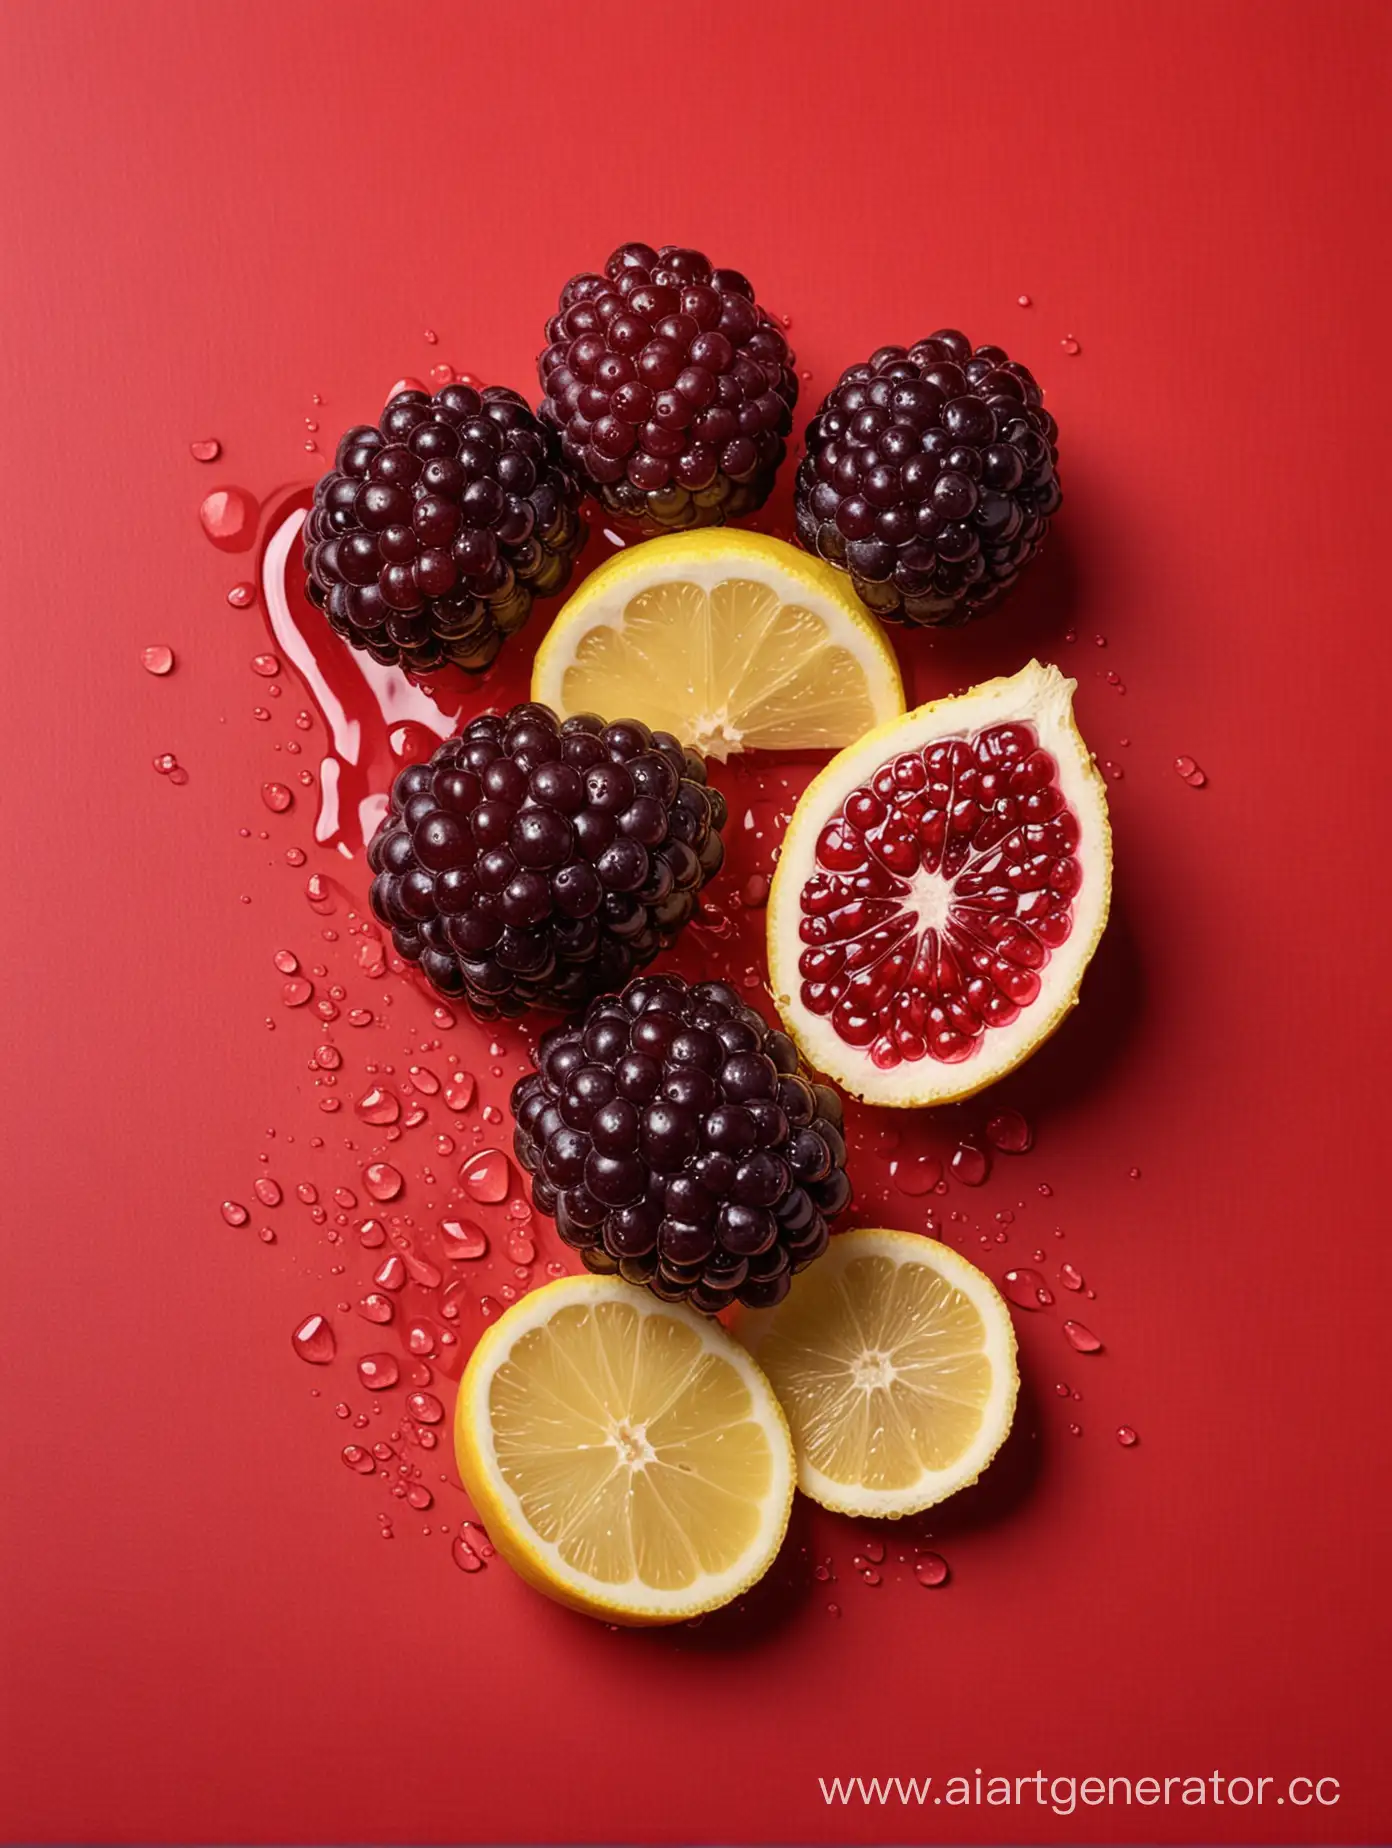 Fresh-Boysenberry-and-Lemon-Slices-on-Vibrant-Red-Background